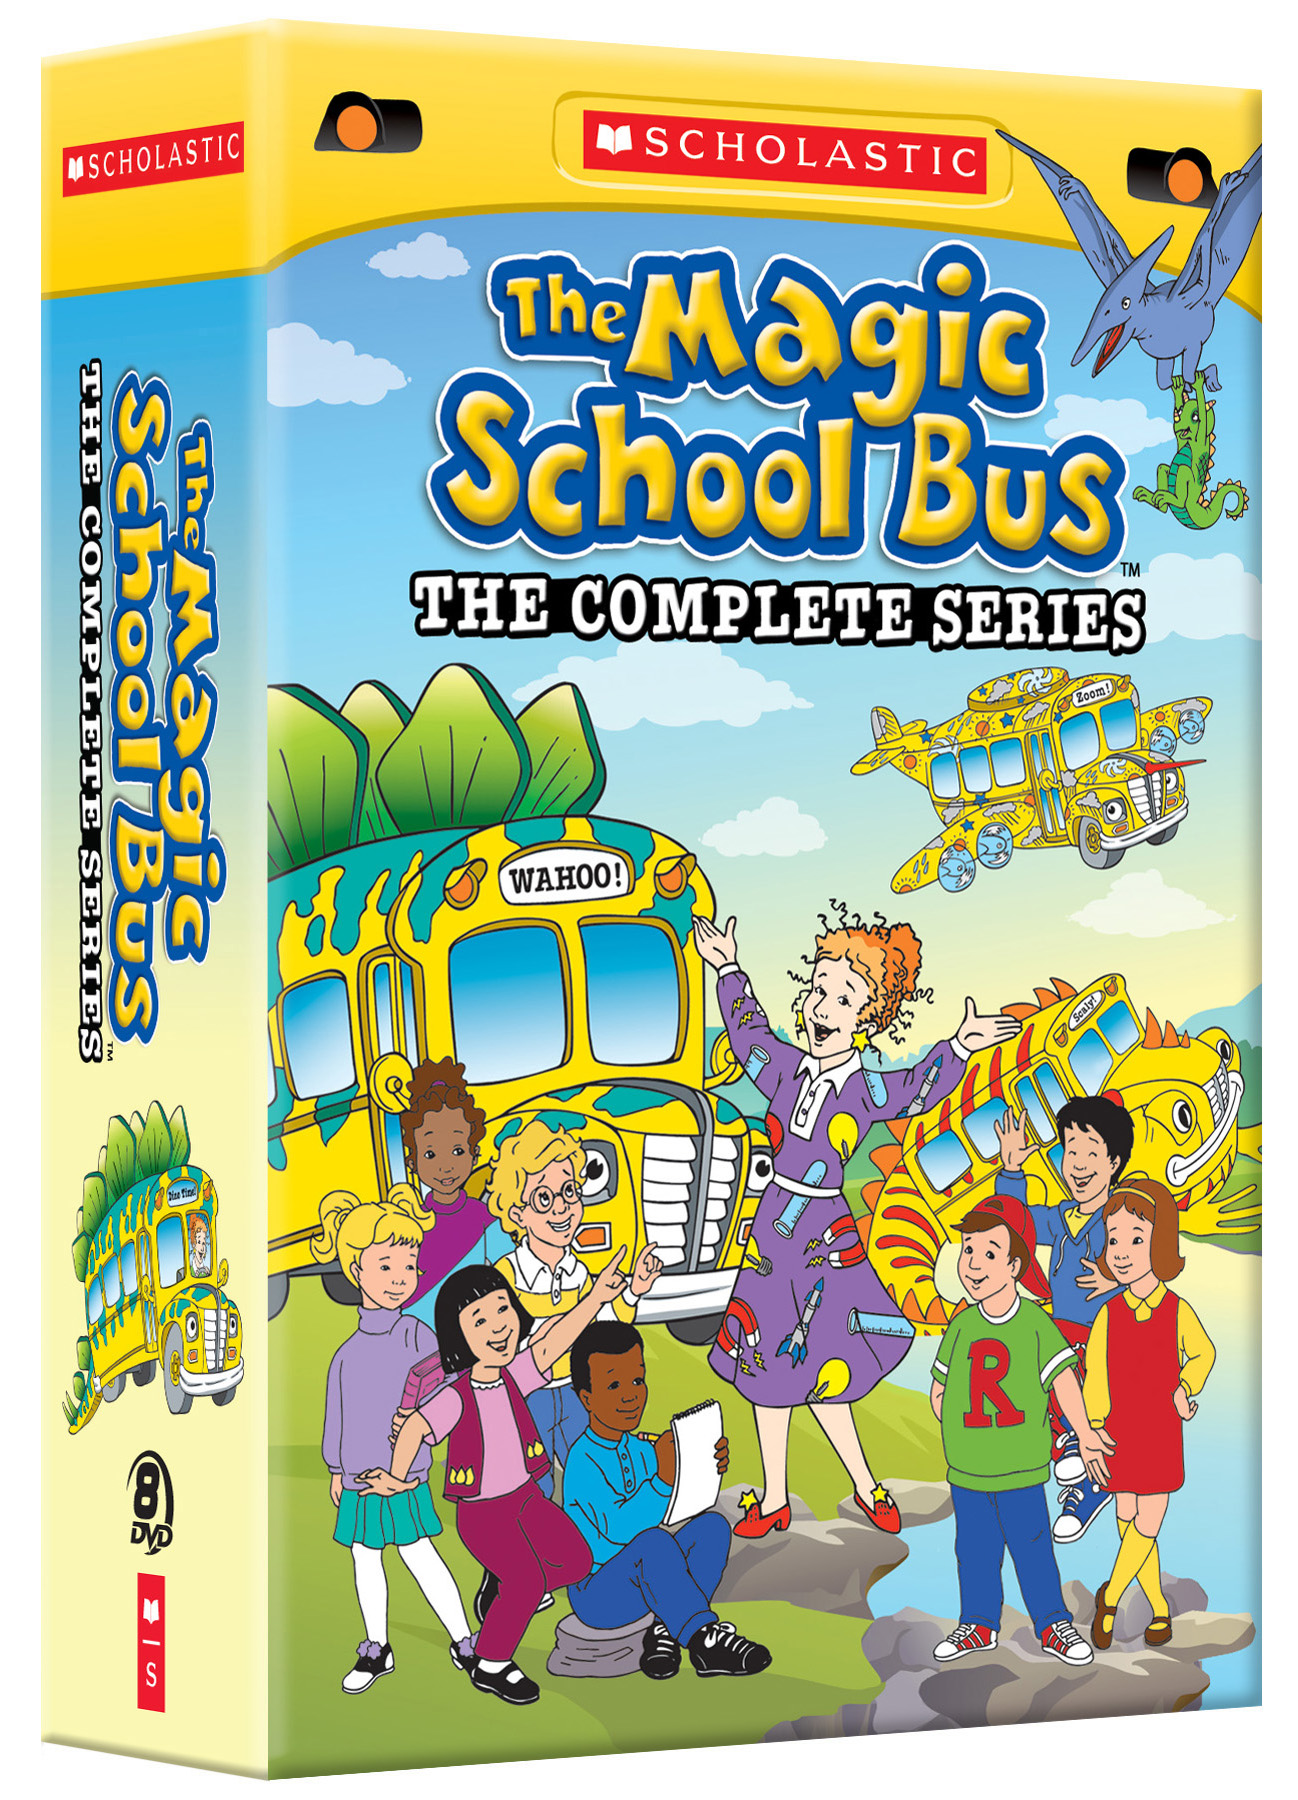 The Magic School Bus Complete Series 1-4 DVD Boxset